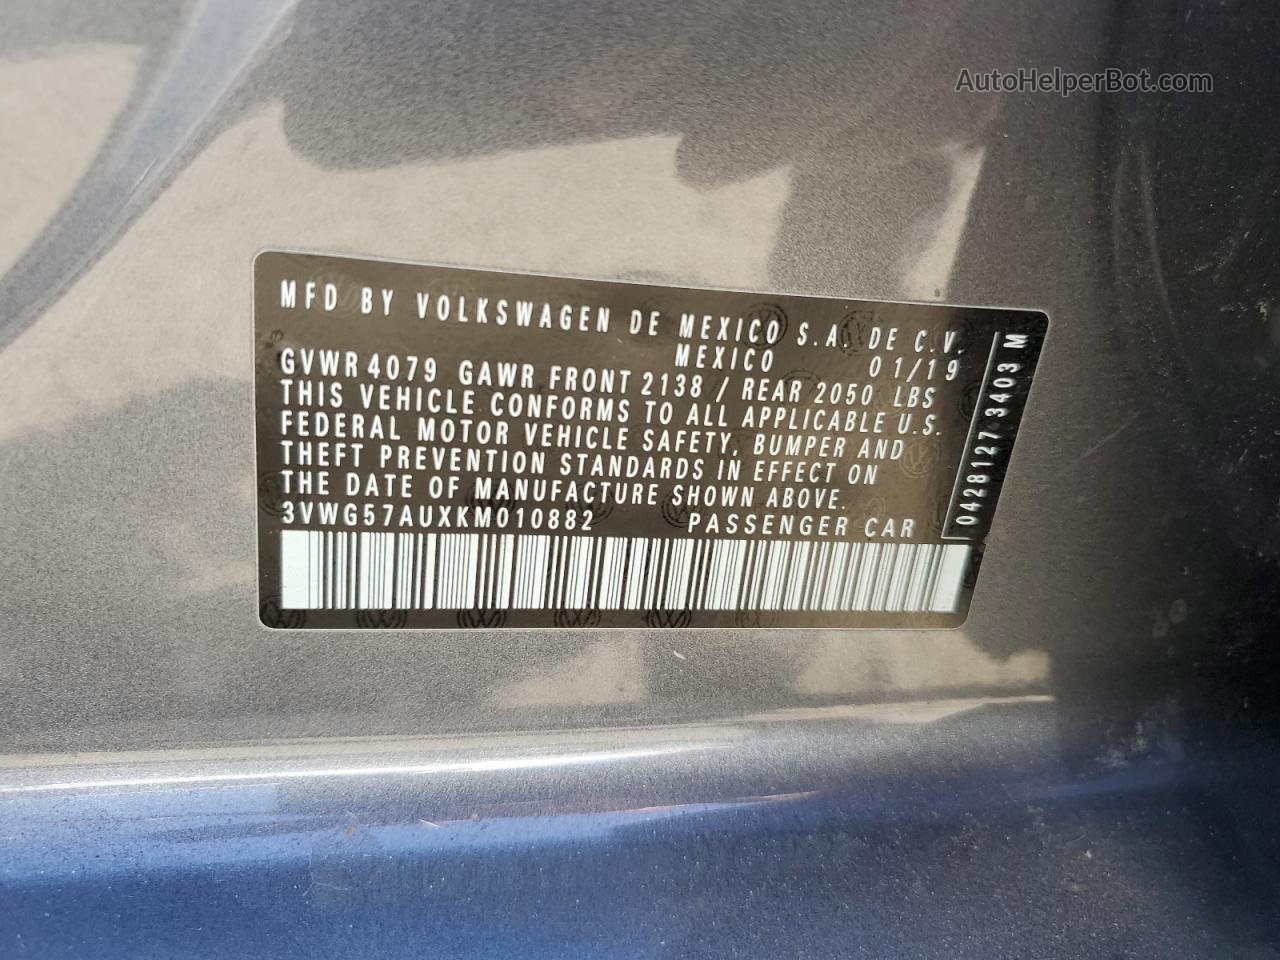 2019 Volkswagen Golf S Gray vin: 3VWG57AUXKM010882